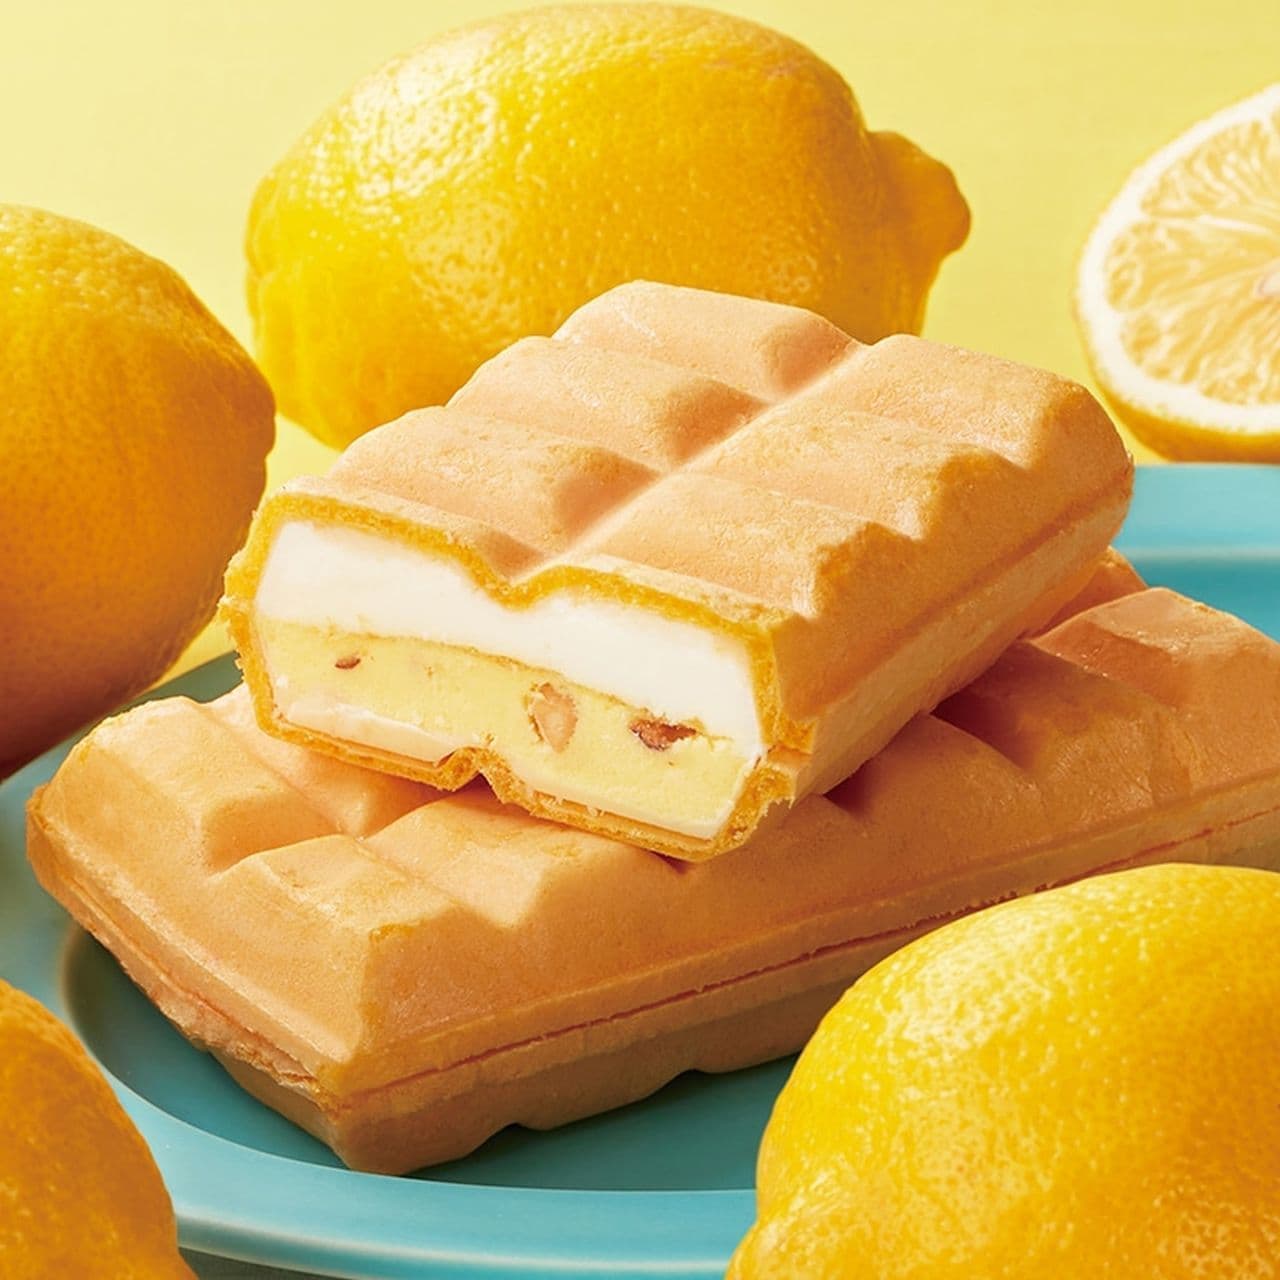 Shateraise "DESSERT Monaka Setouchi Lemon Tart